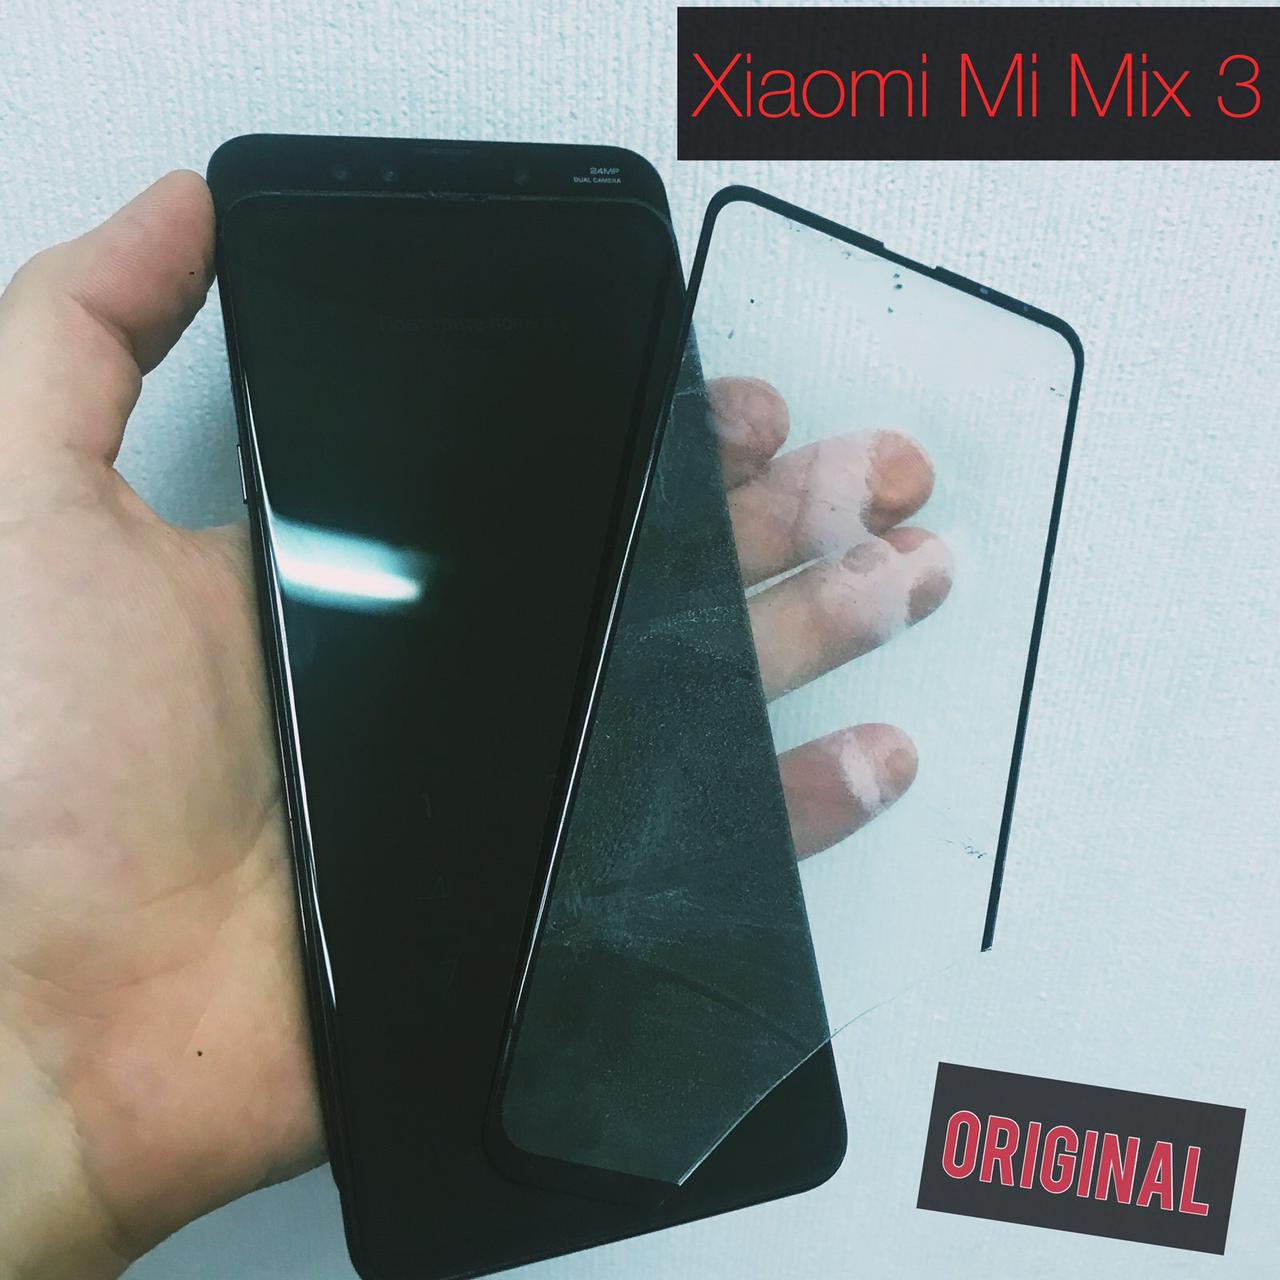 Ремонт Xiaomi Mi Mix 3 / замена стекла, экрана, батареи.